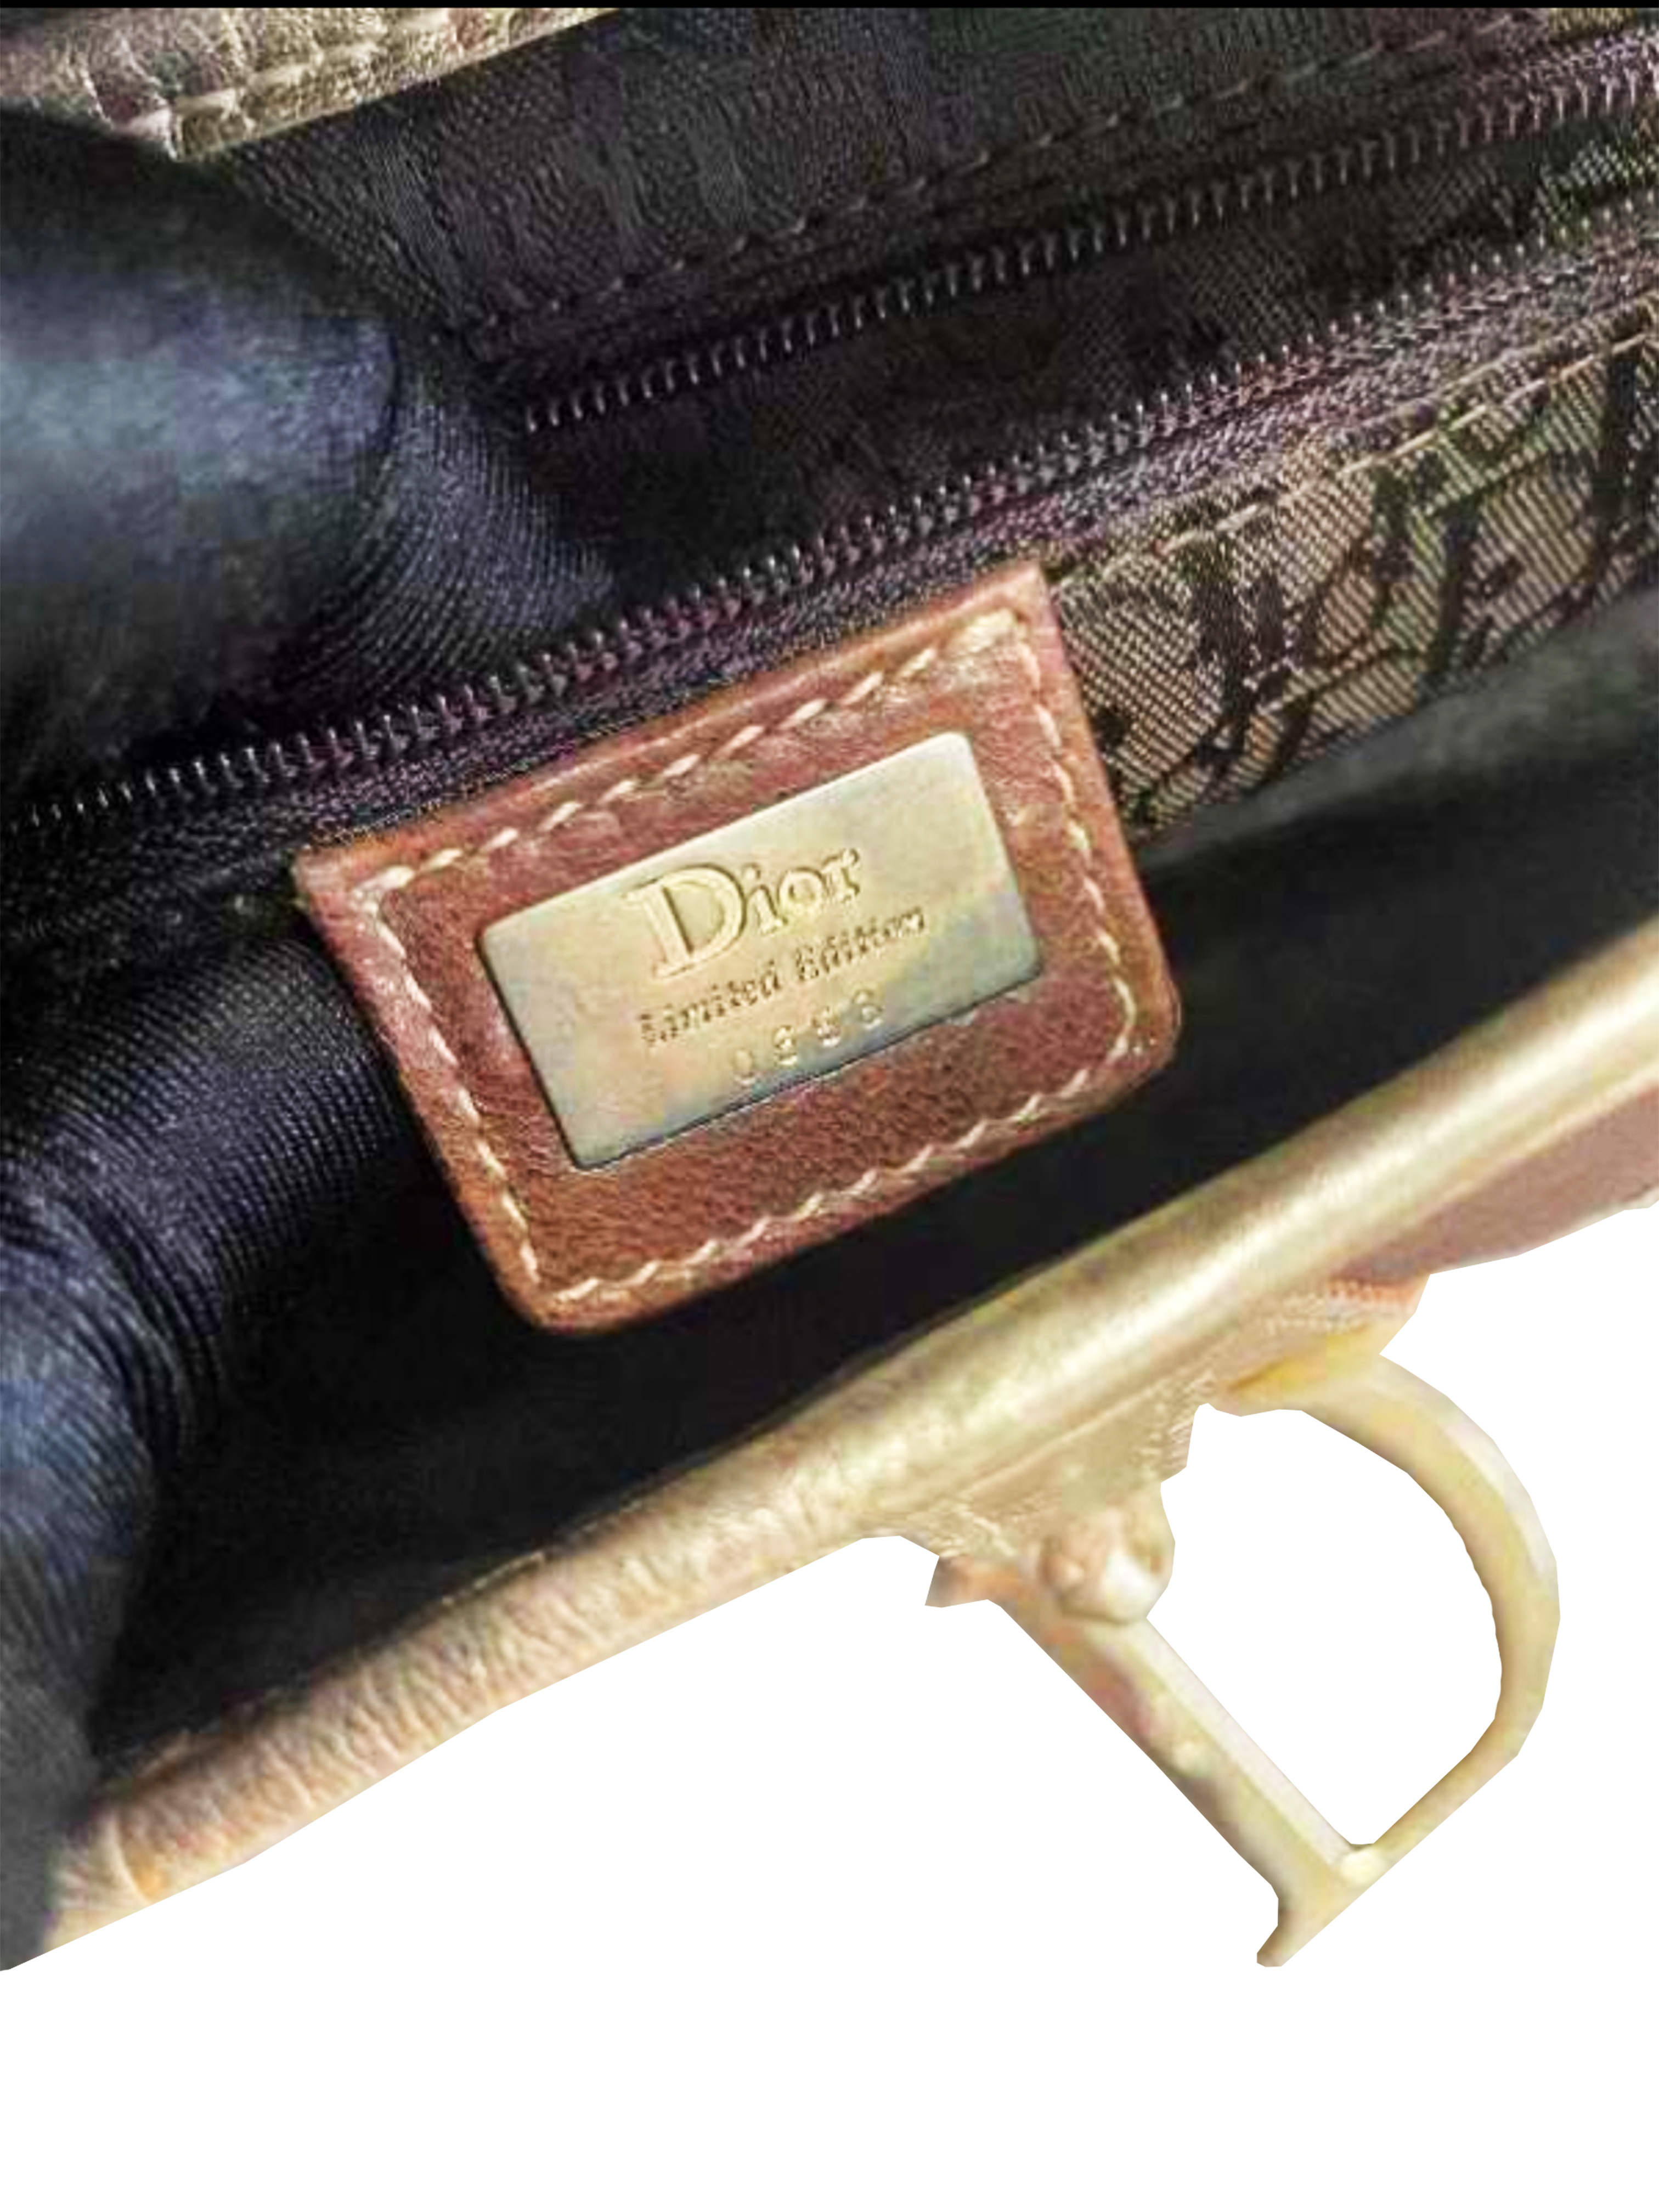 Christian Dior 2000s Limited Embossed Croc Saddle Bag · INTO